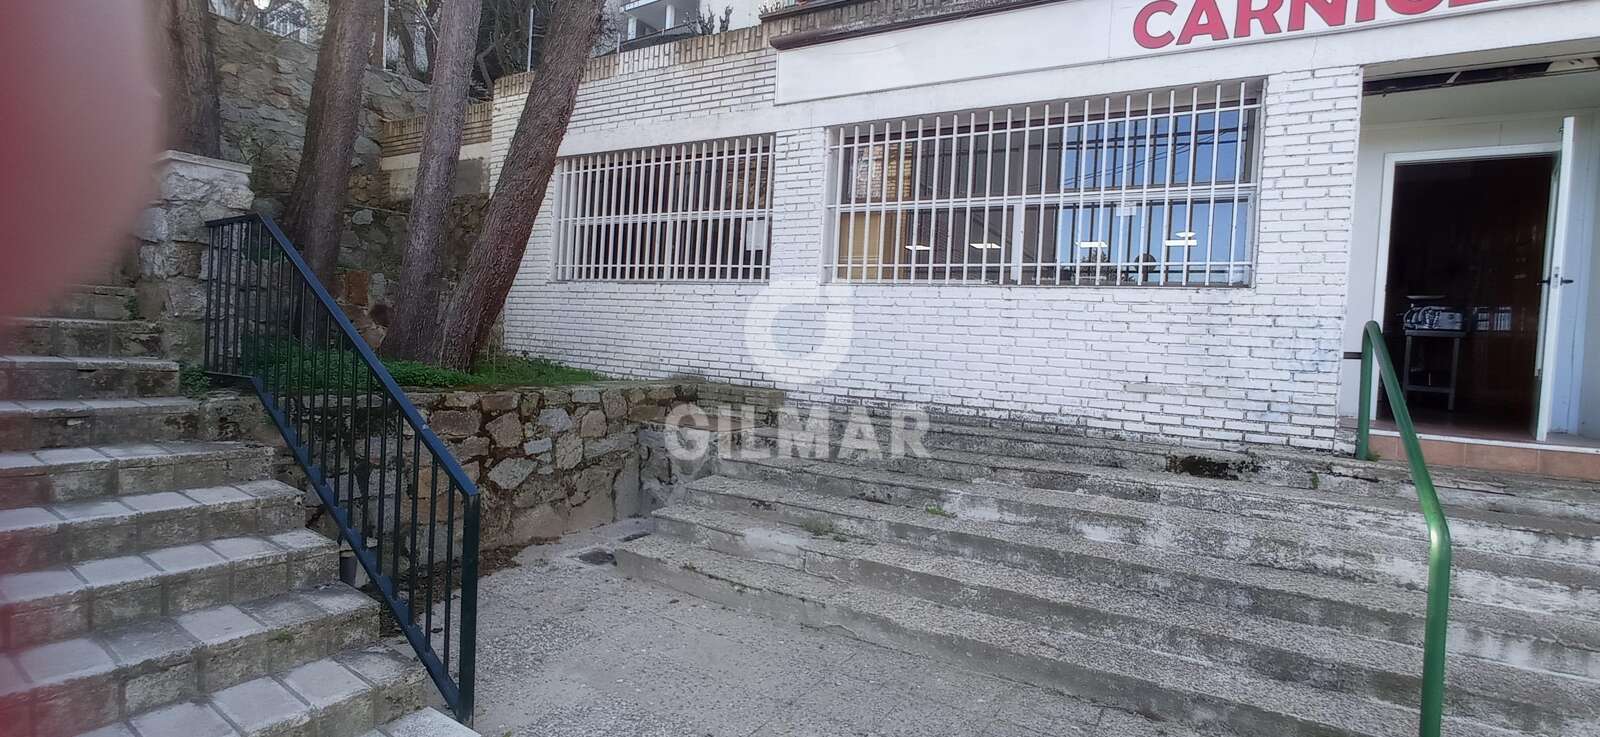 Property slider Gilmar